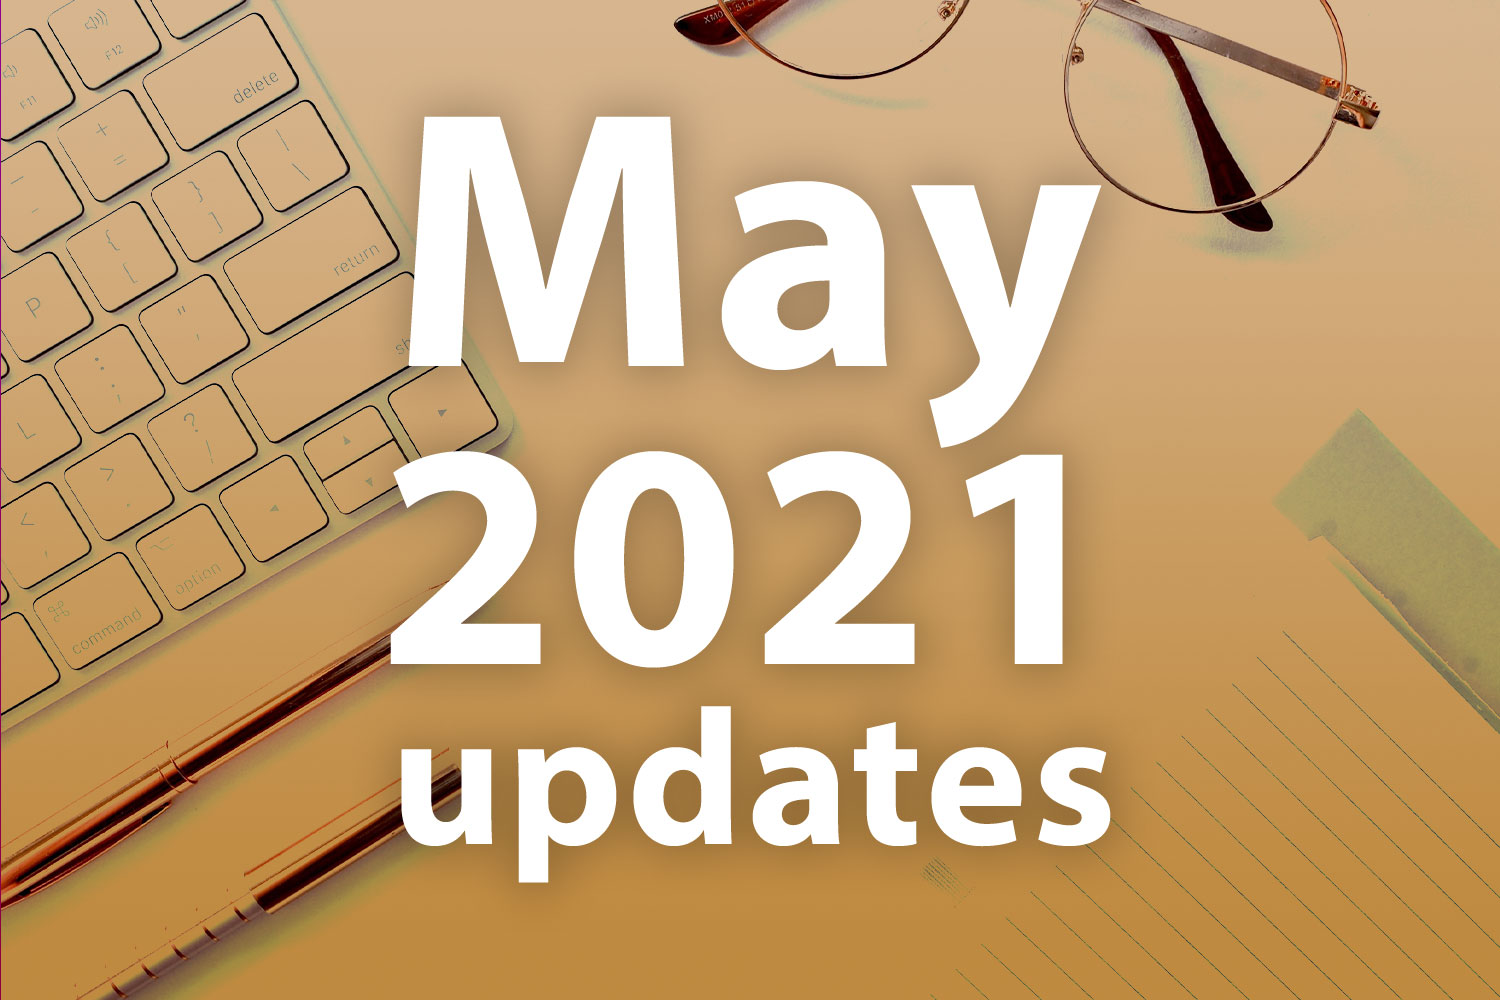 May 2021 updates